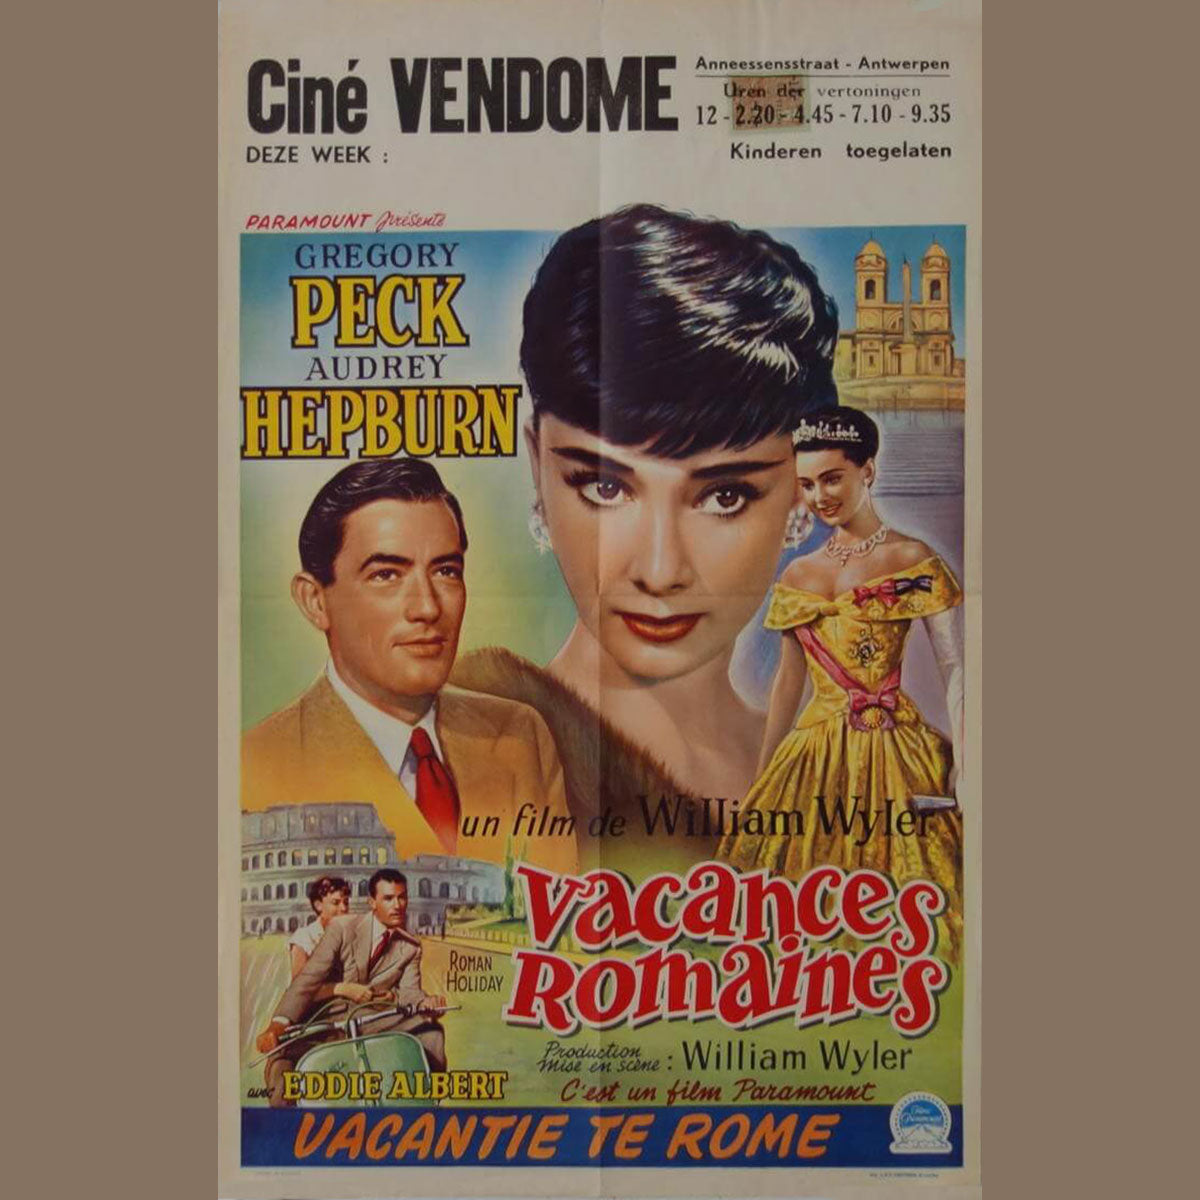 Roman Holiday (1953)